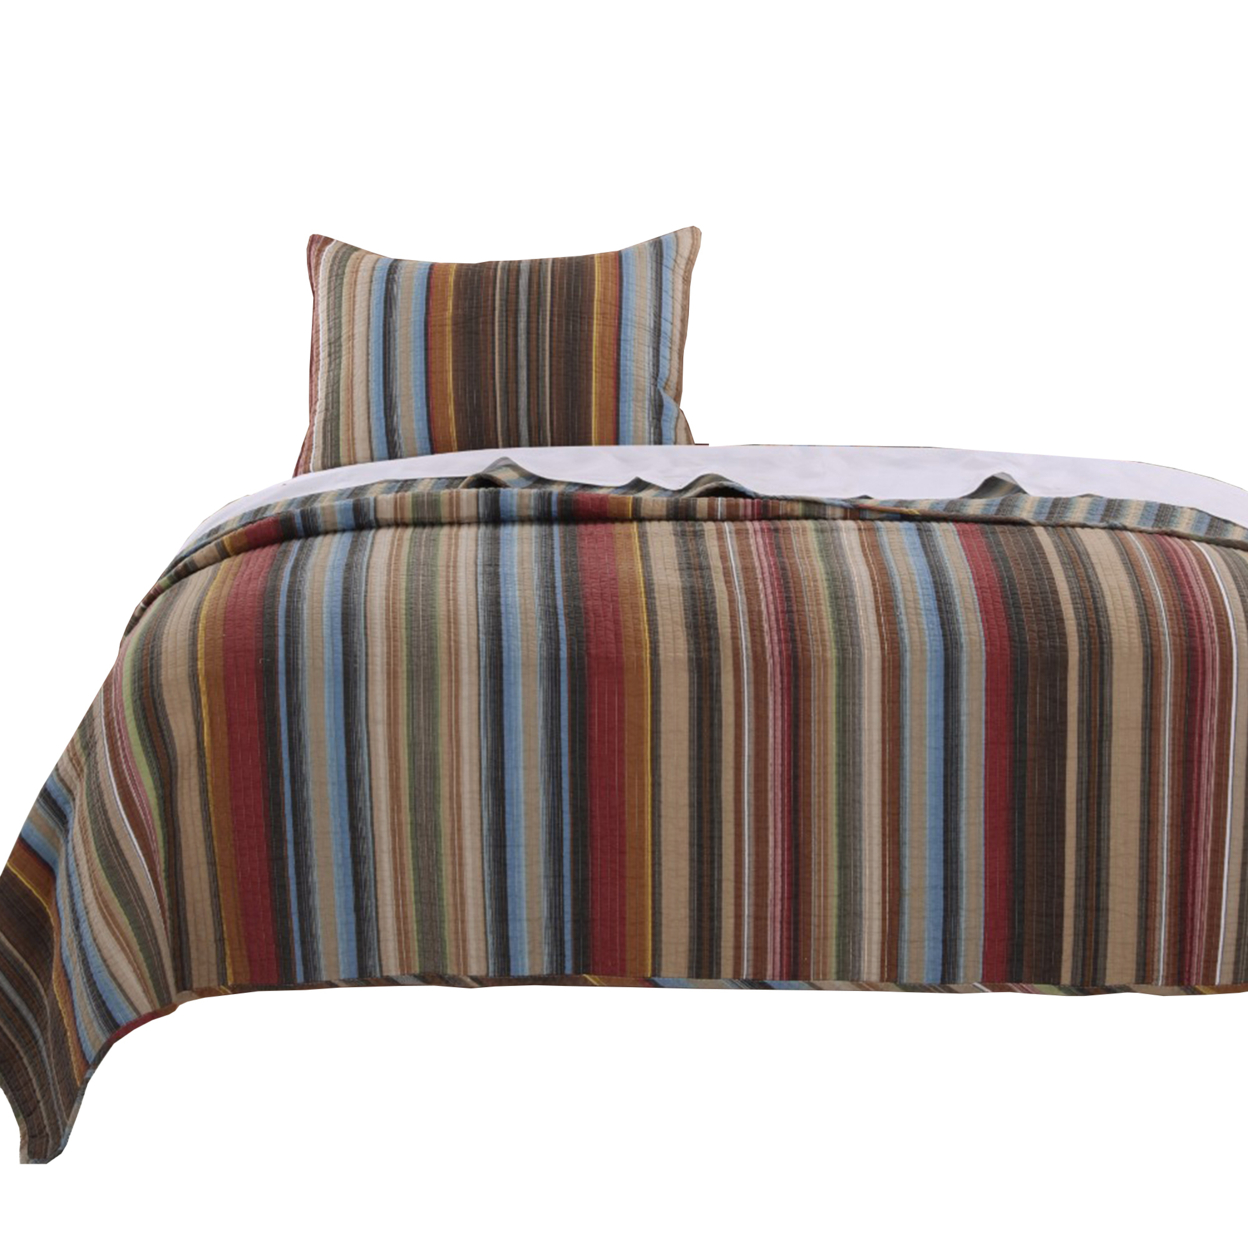 Phoenix Fabric 2 Piece Twin Size Quilt Set With Striped Prints, Multicolor- Saltoro Sherpi